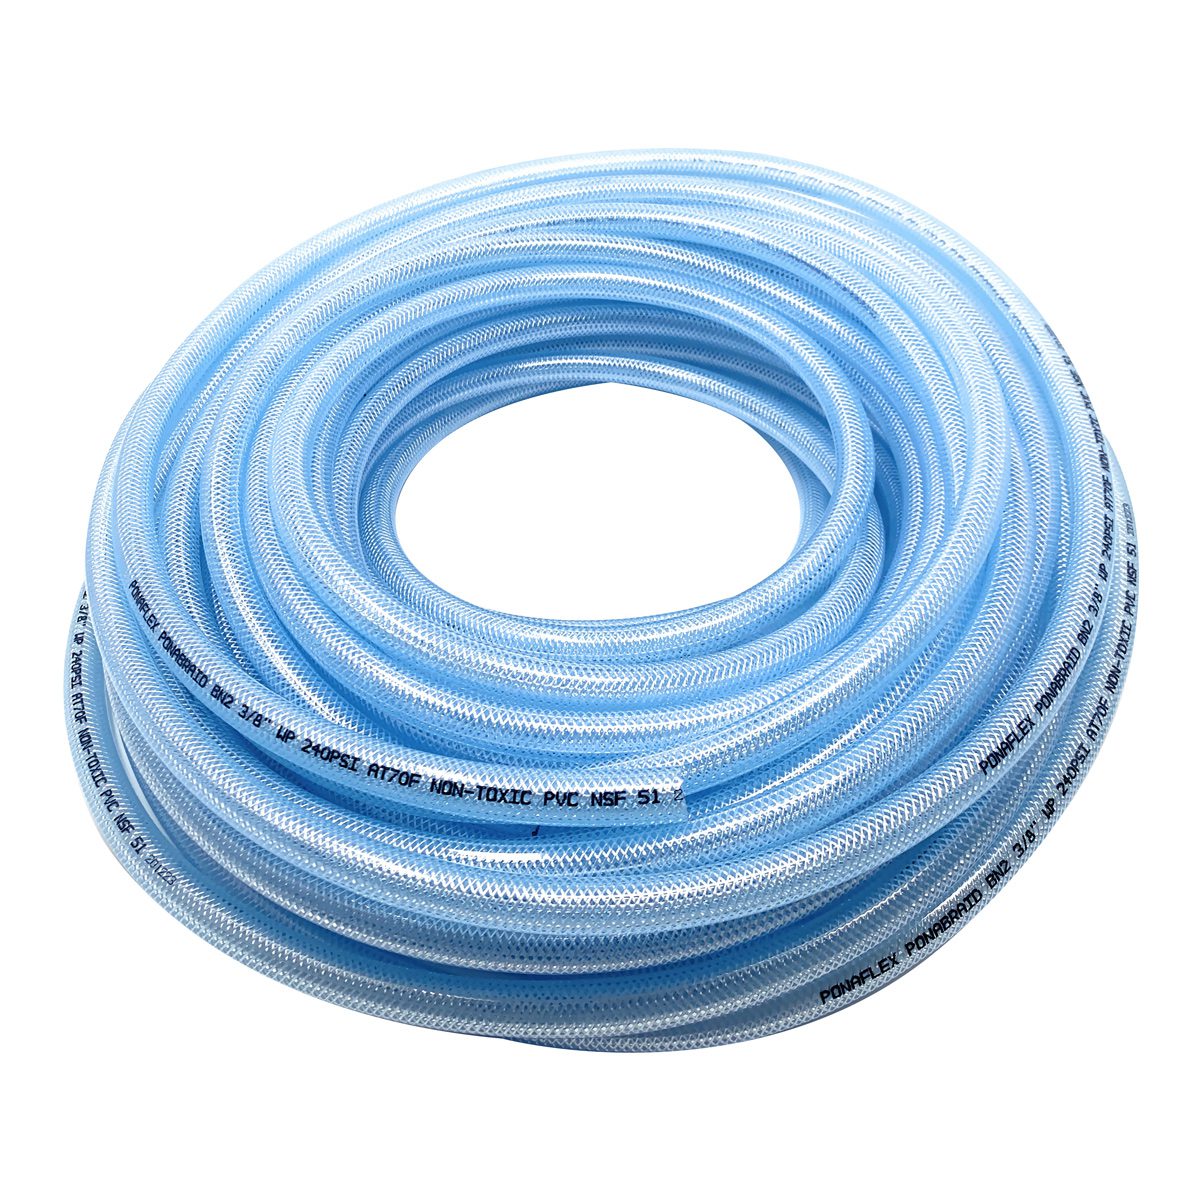 Gloxco Clear Braided PVC Tube, Food Grade Hose, 3/8 ID, 100 Ft Length